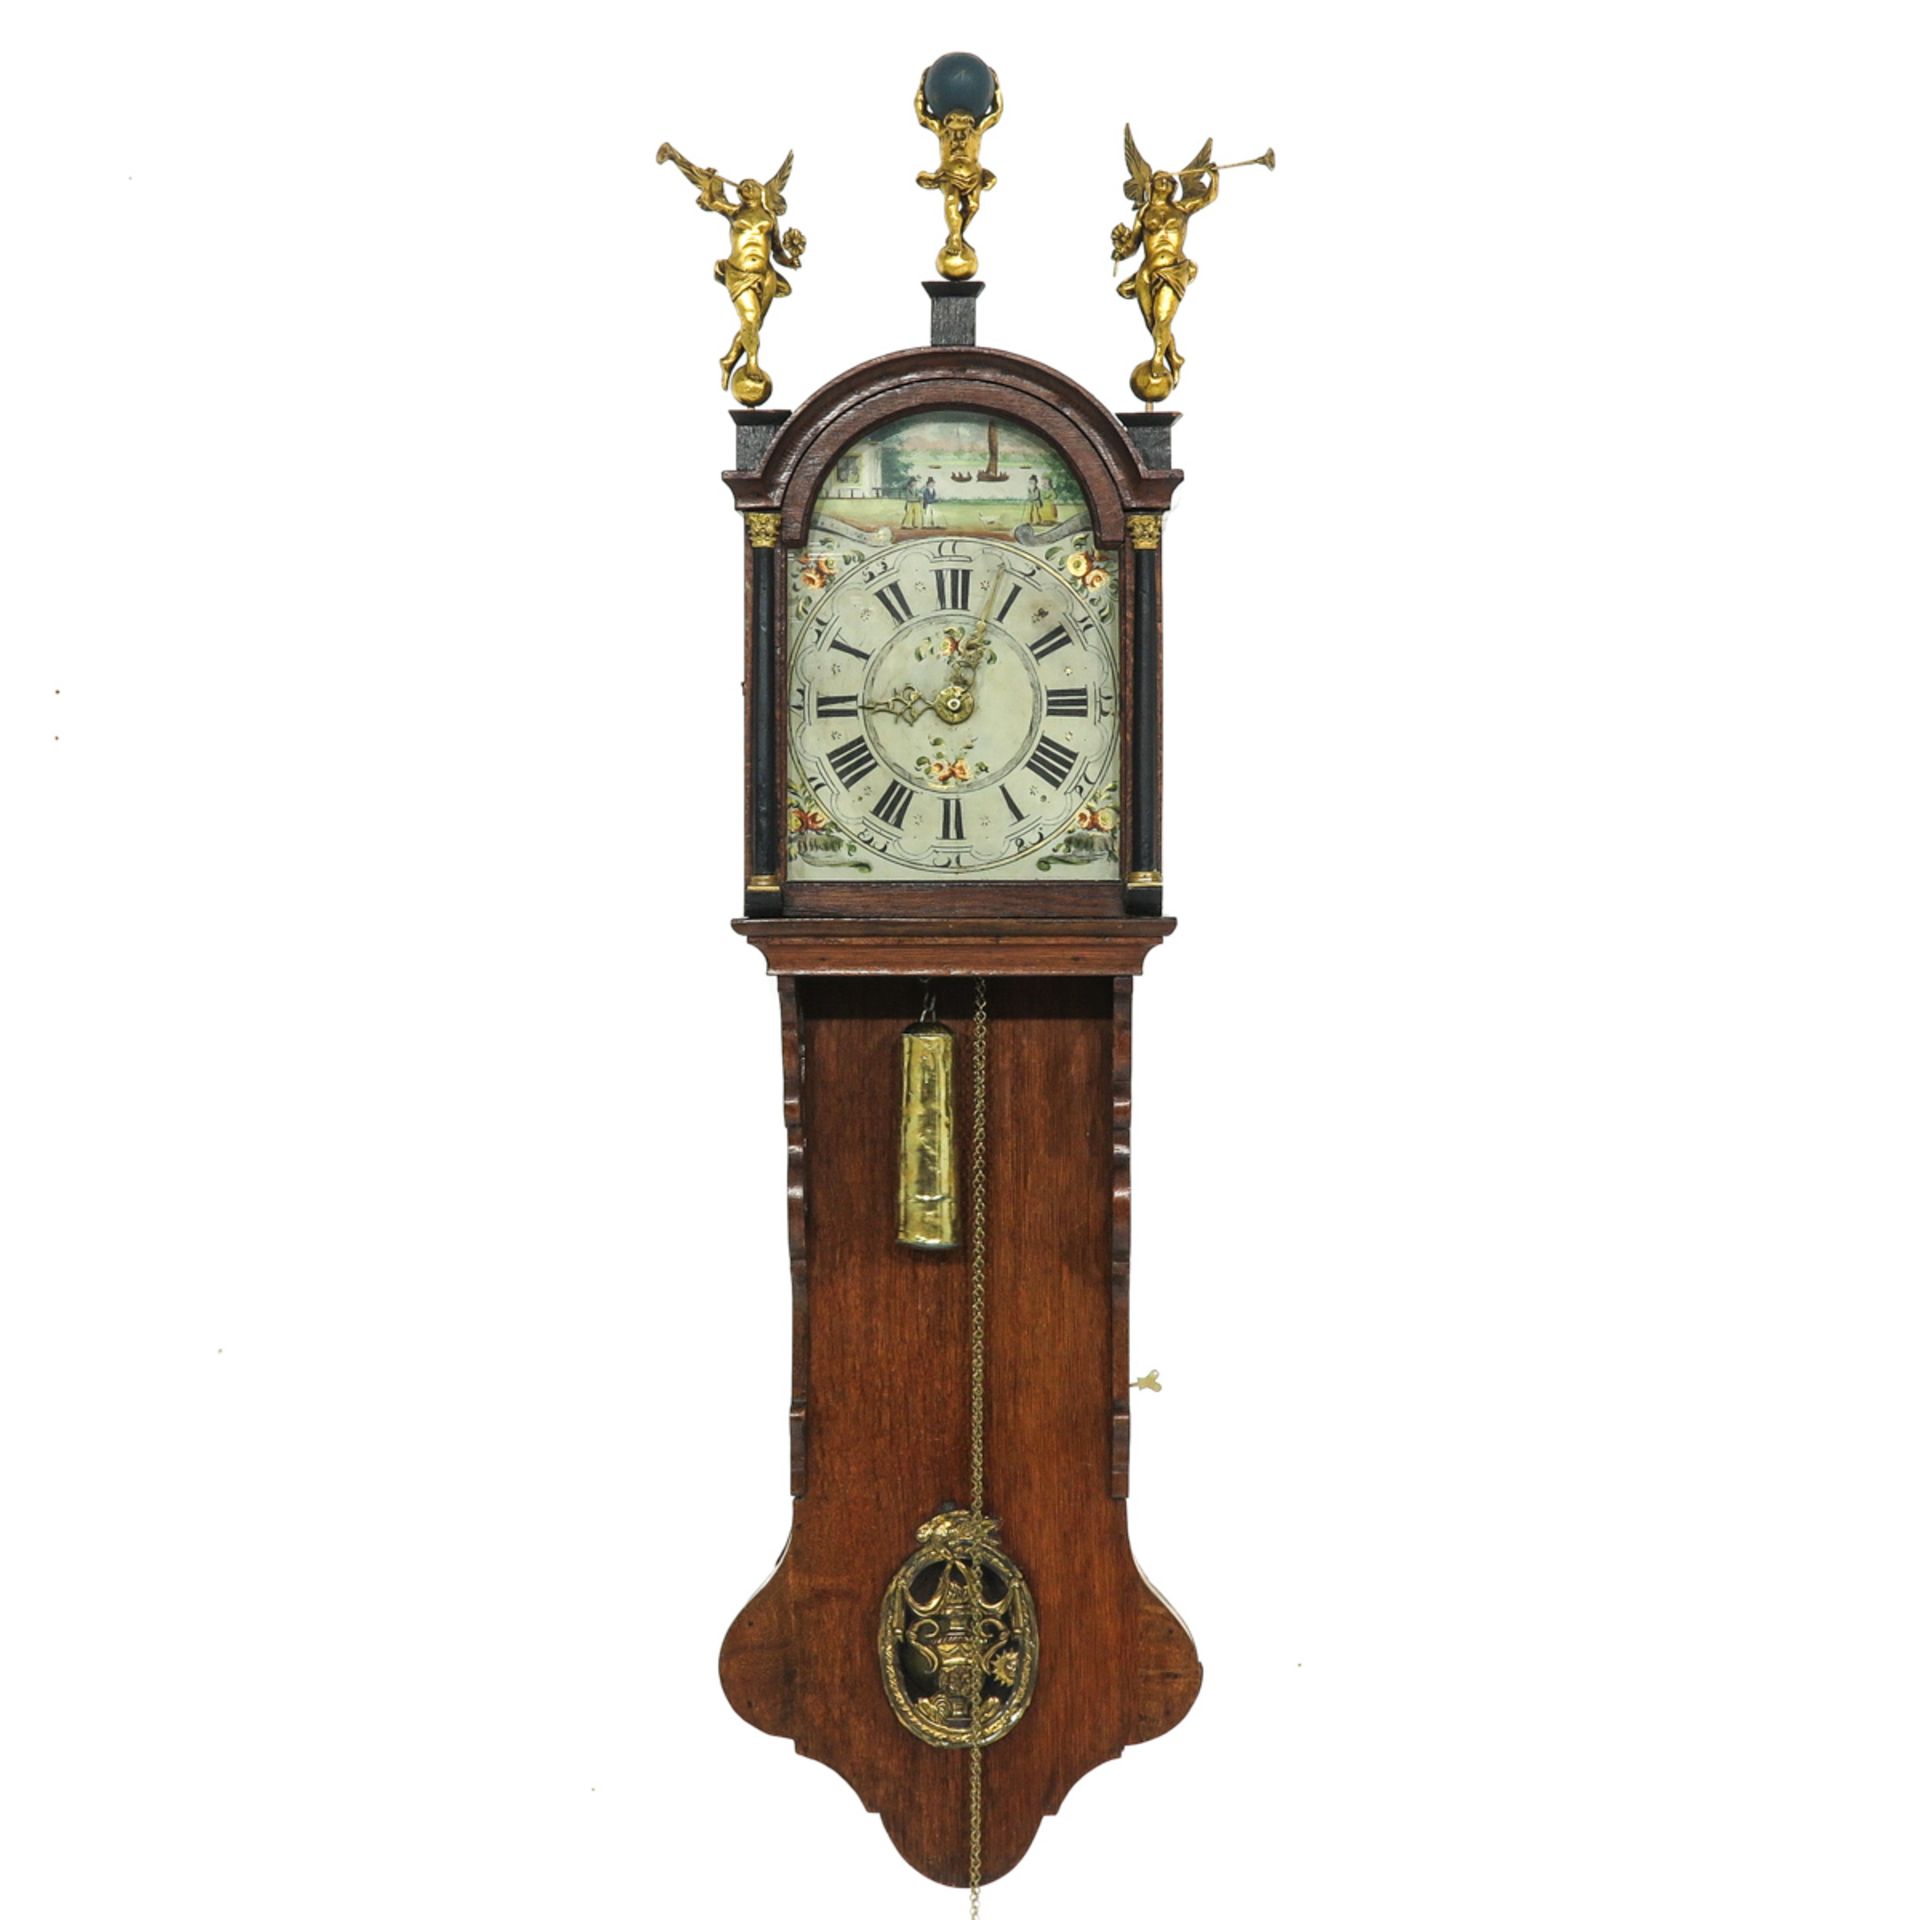 A 19th Century Friesland Wall Clock or Staartklok